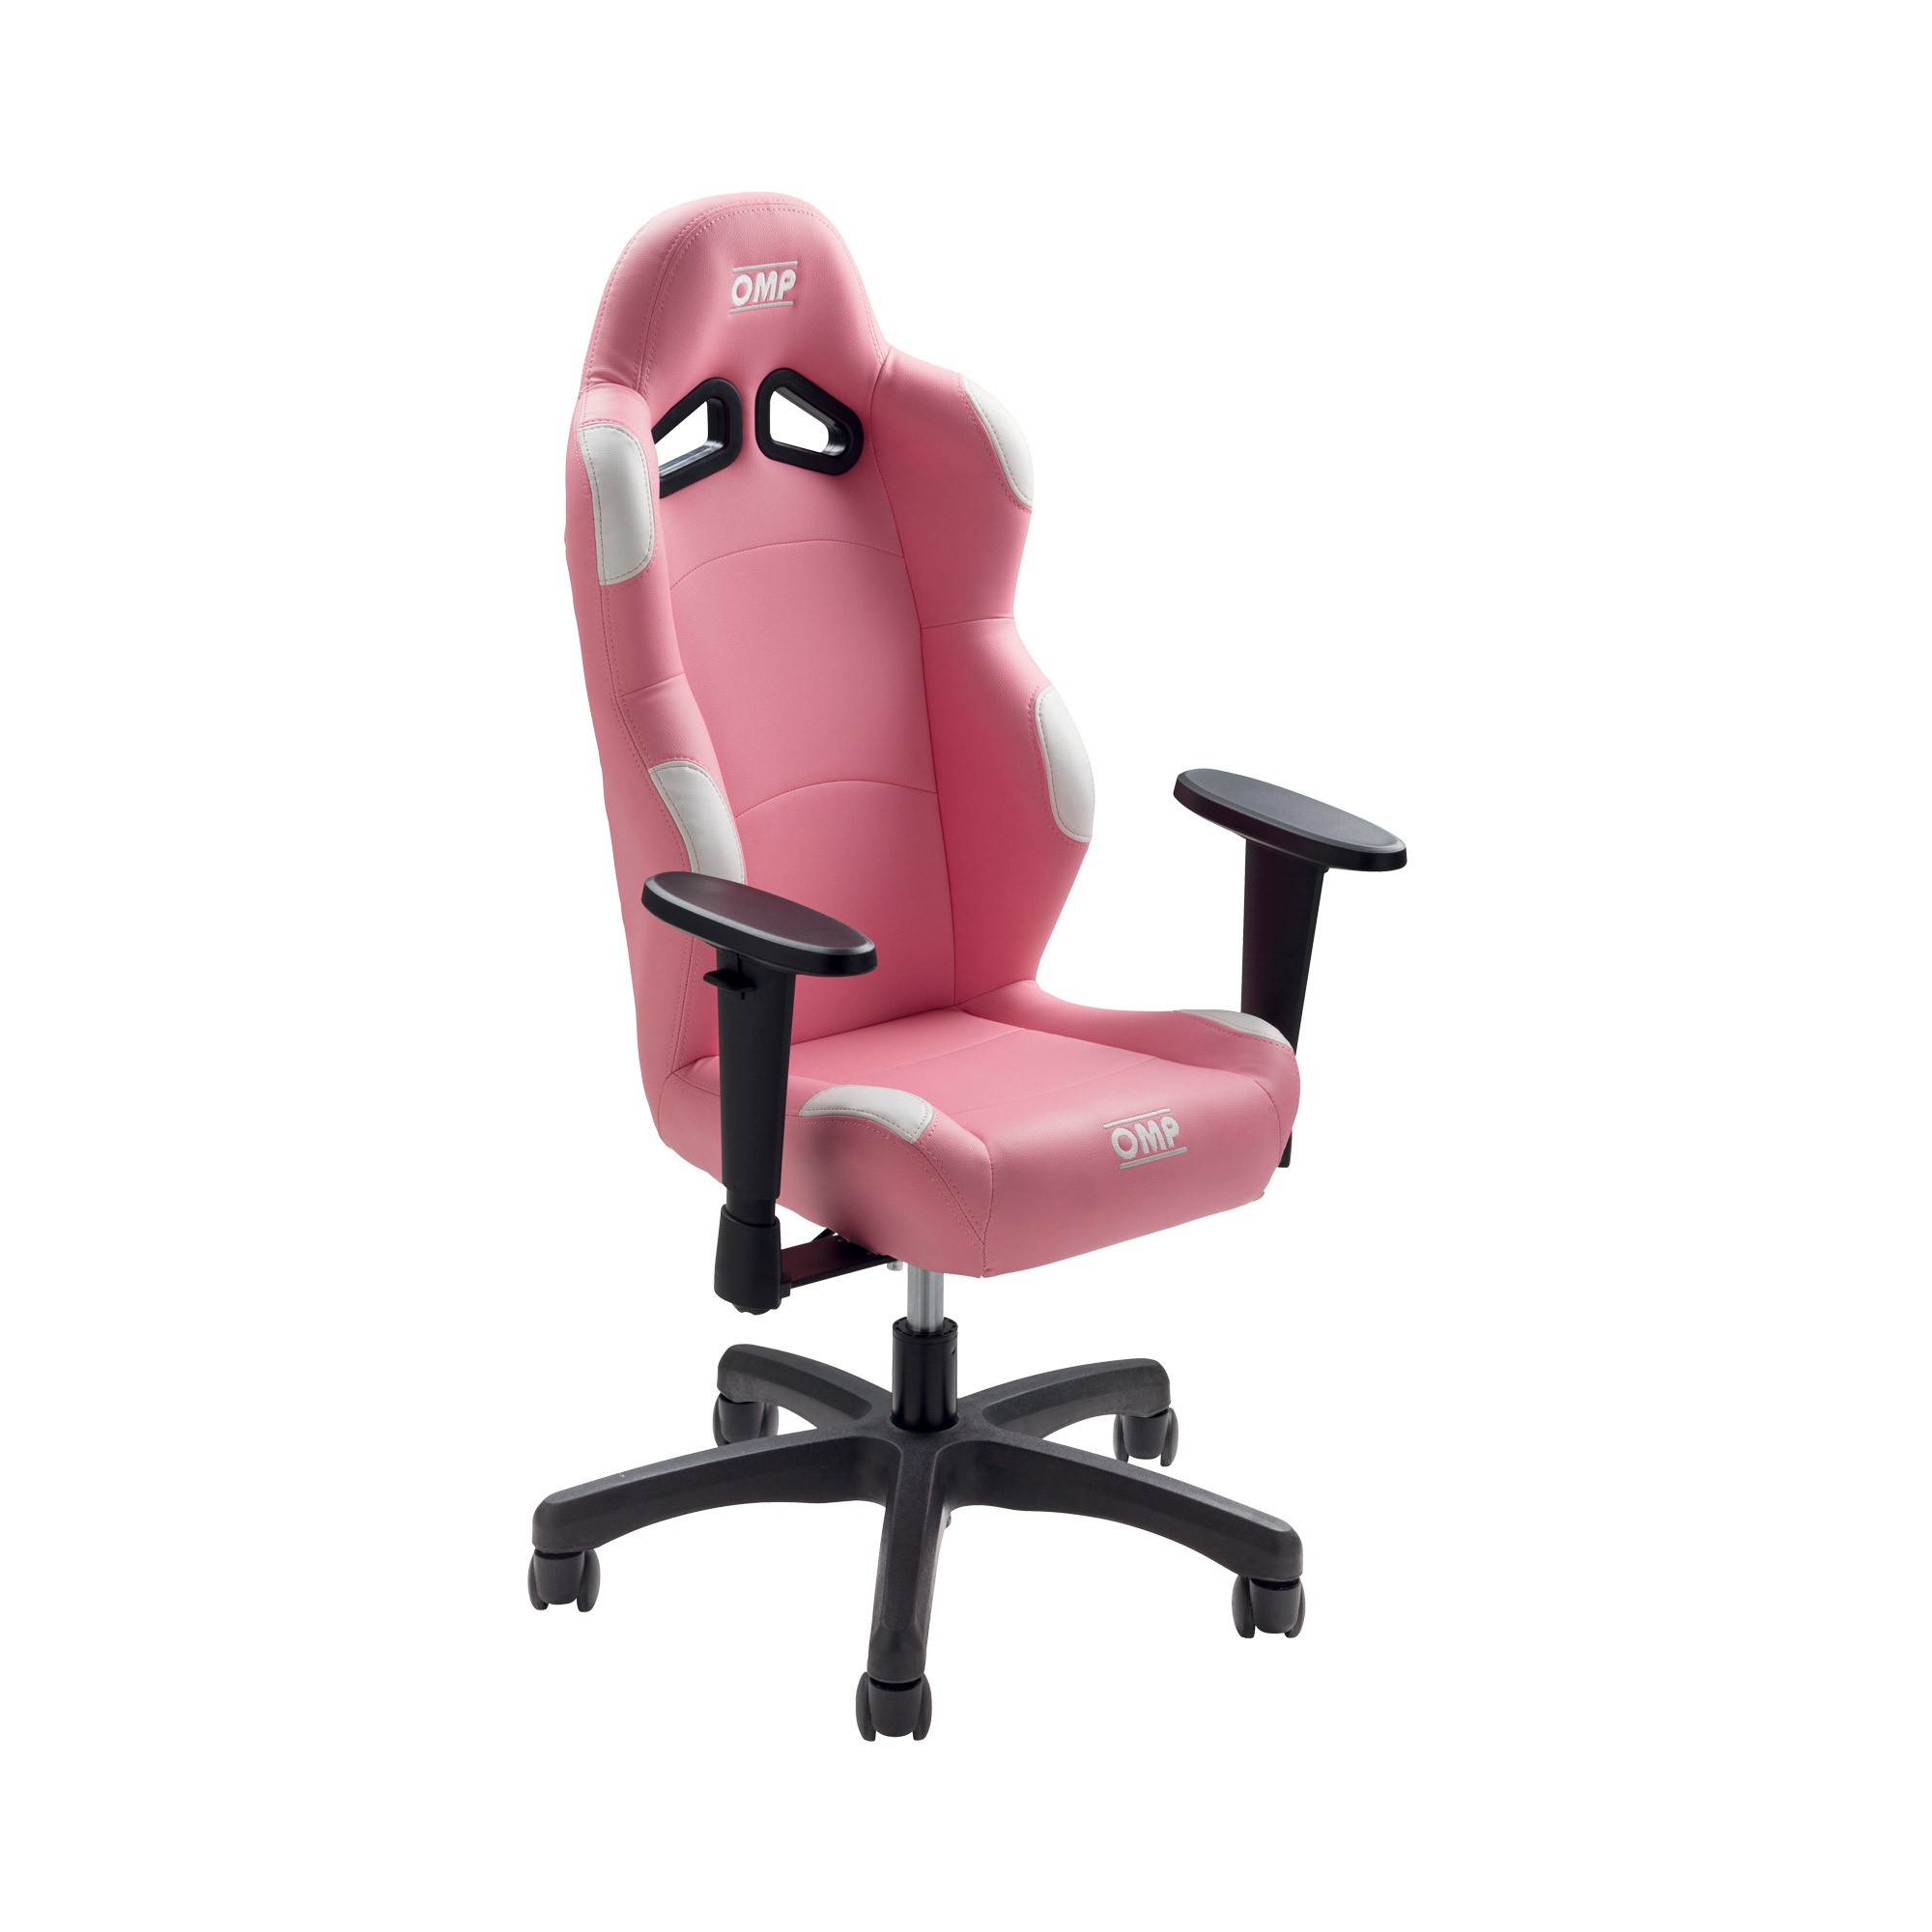 Mini OMP Chair